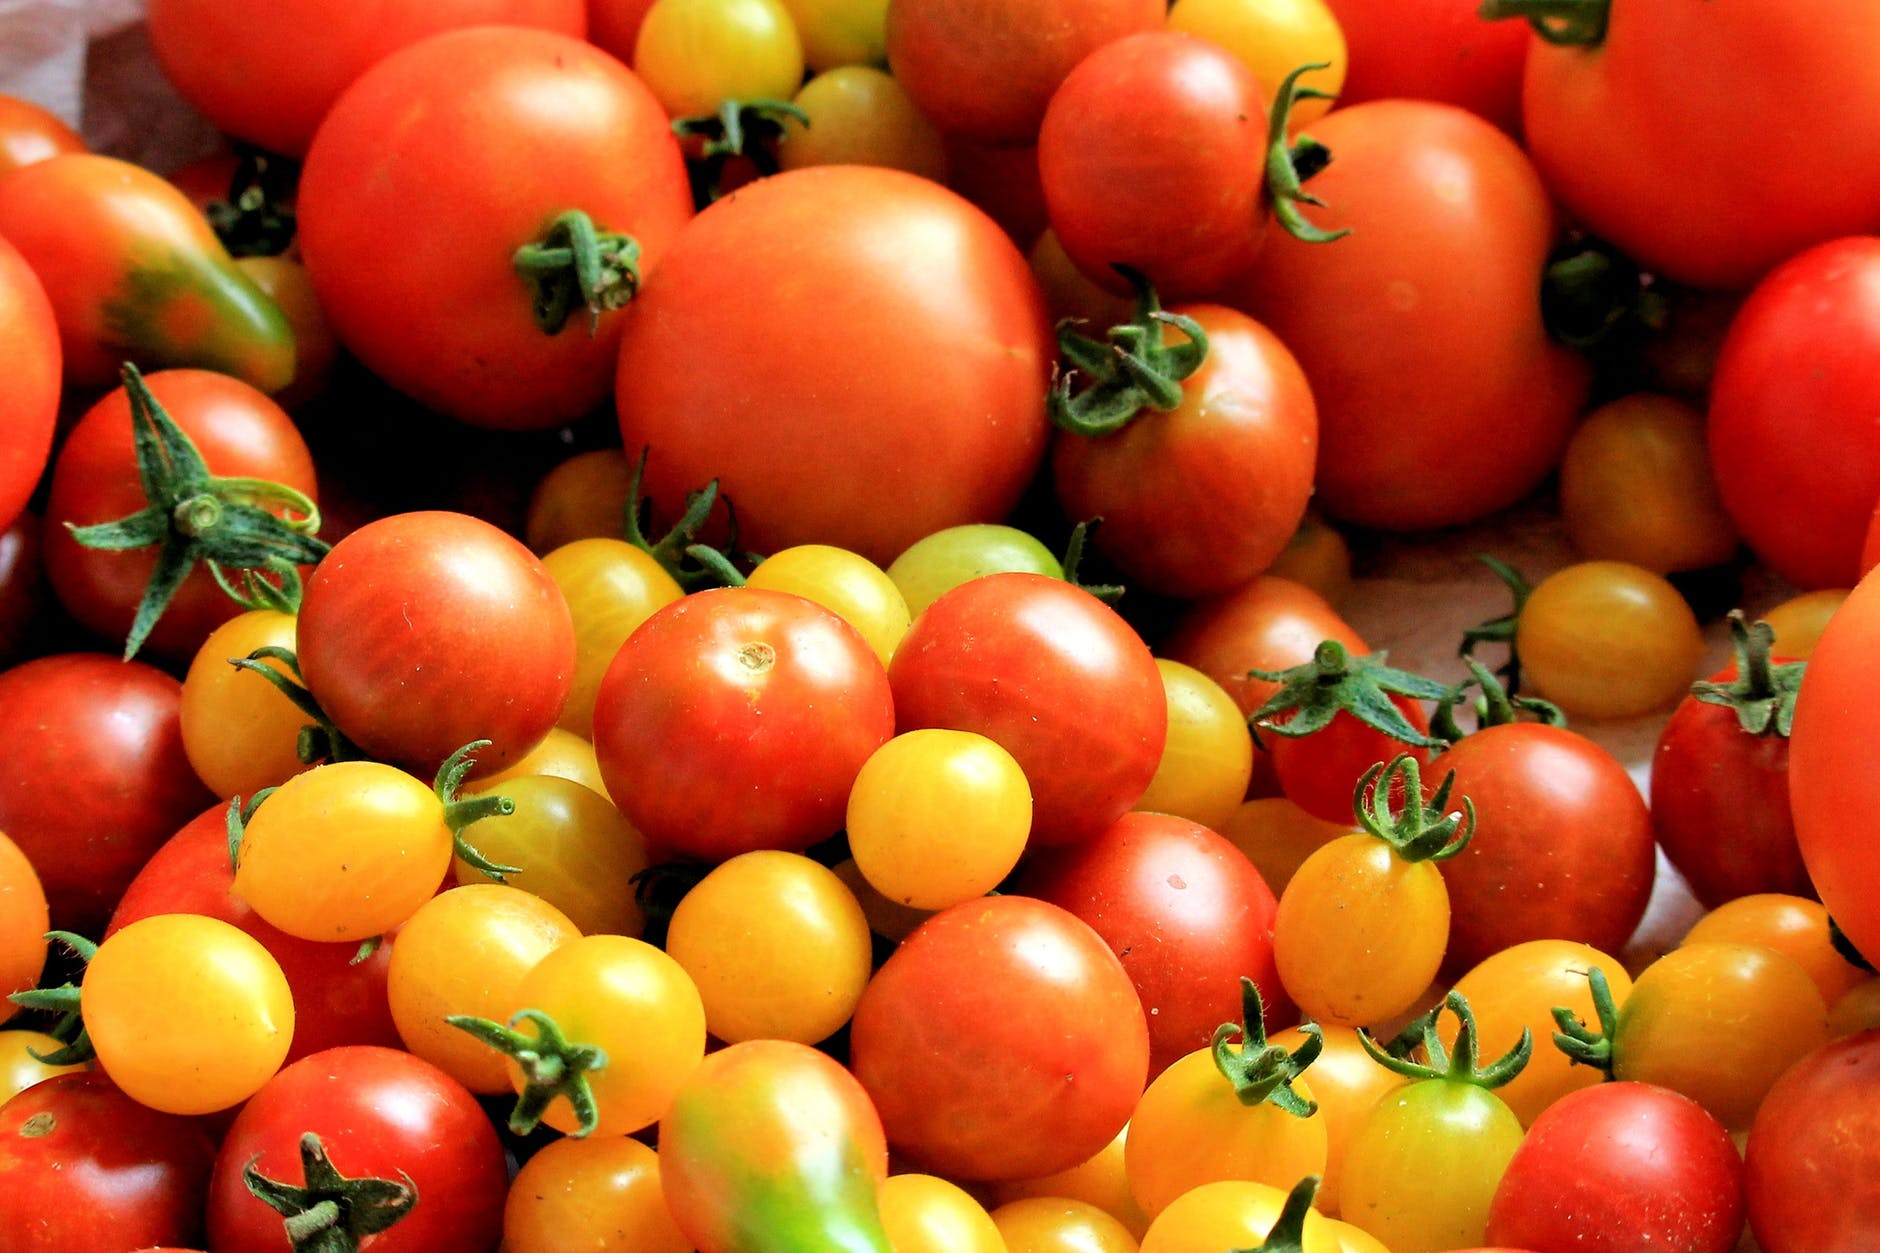 Featured image for “North Carolina Tomato Growers Association Plans Referendum”